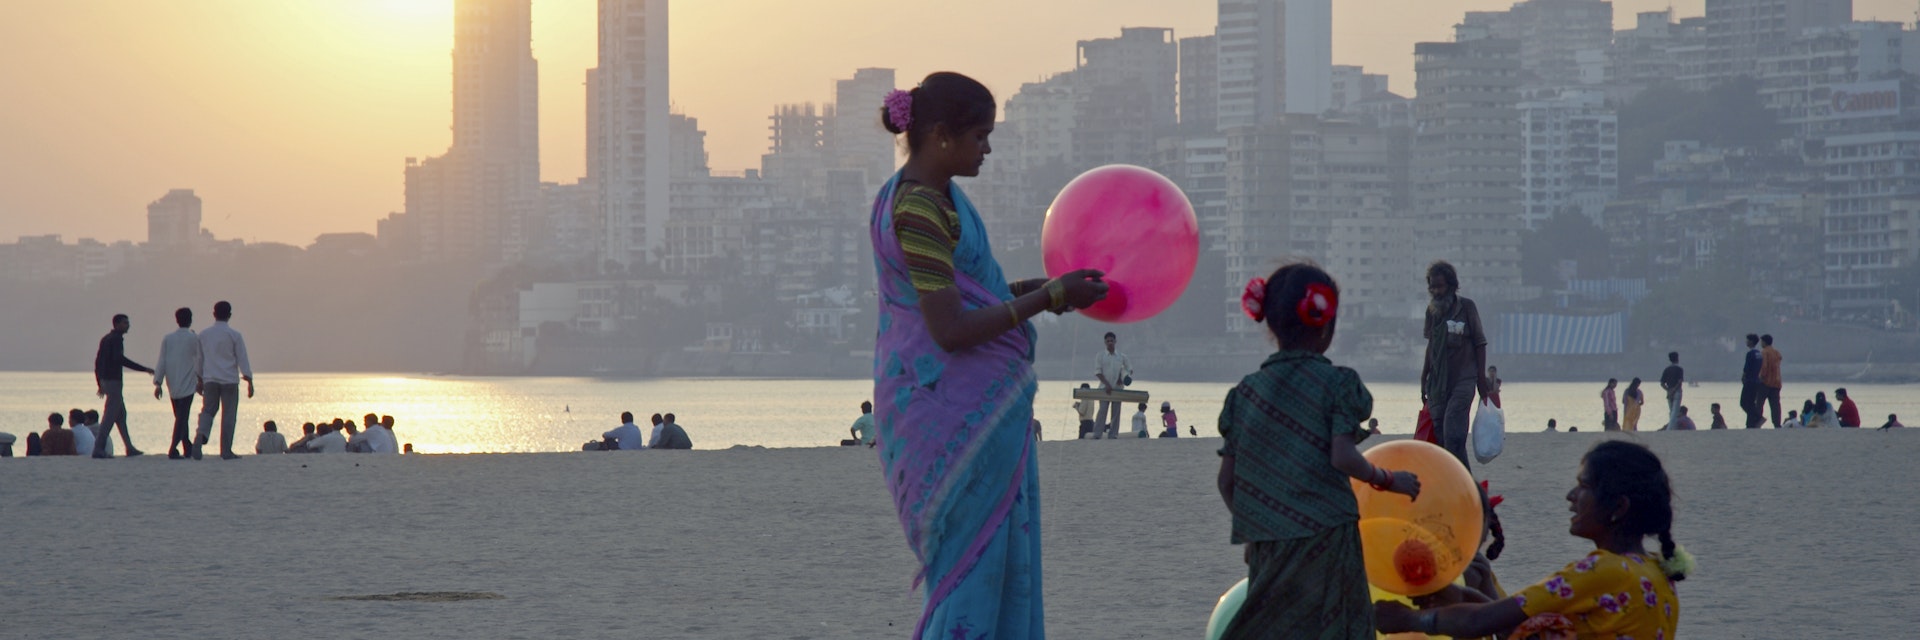 Indian, Mumbai, Chowpatty Beach, people on the beach at sunset